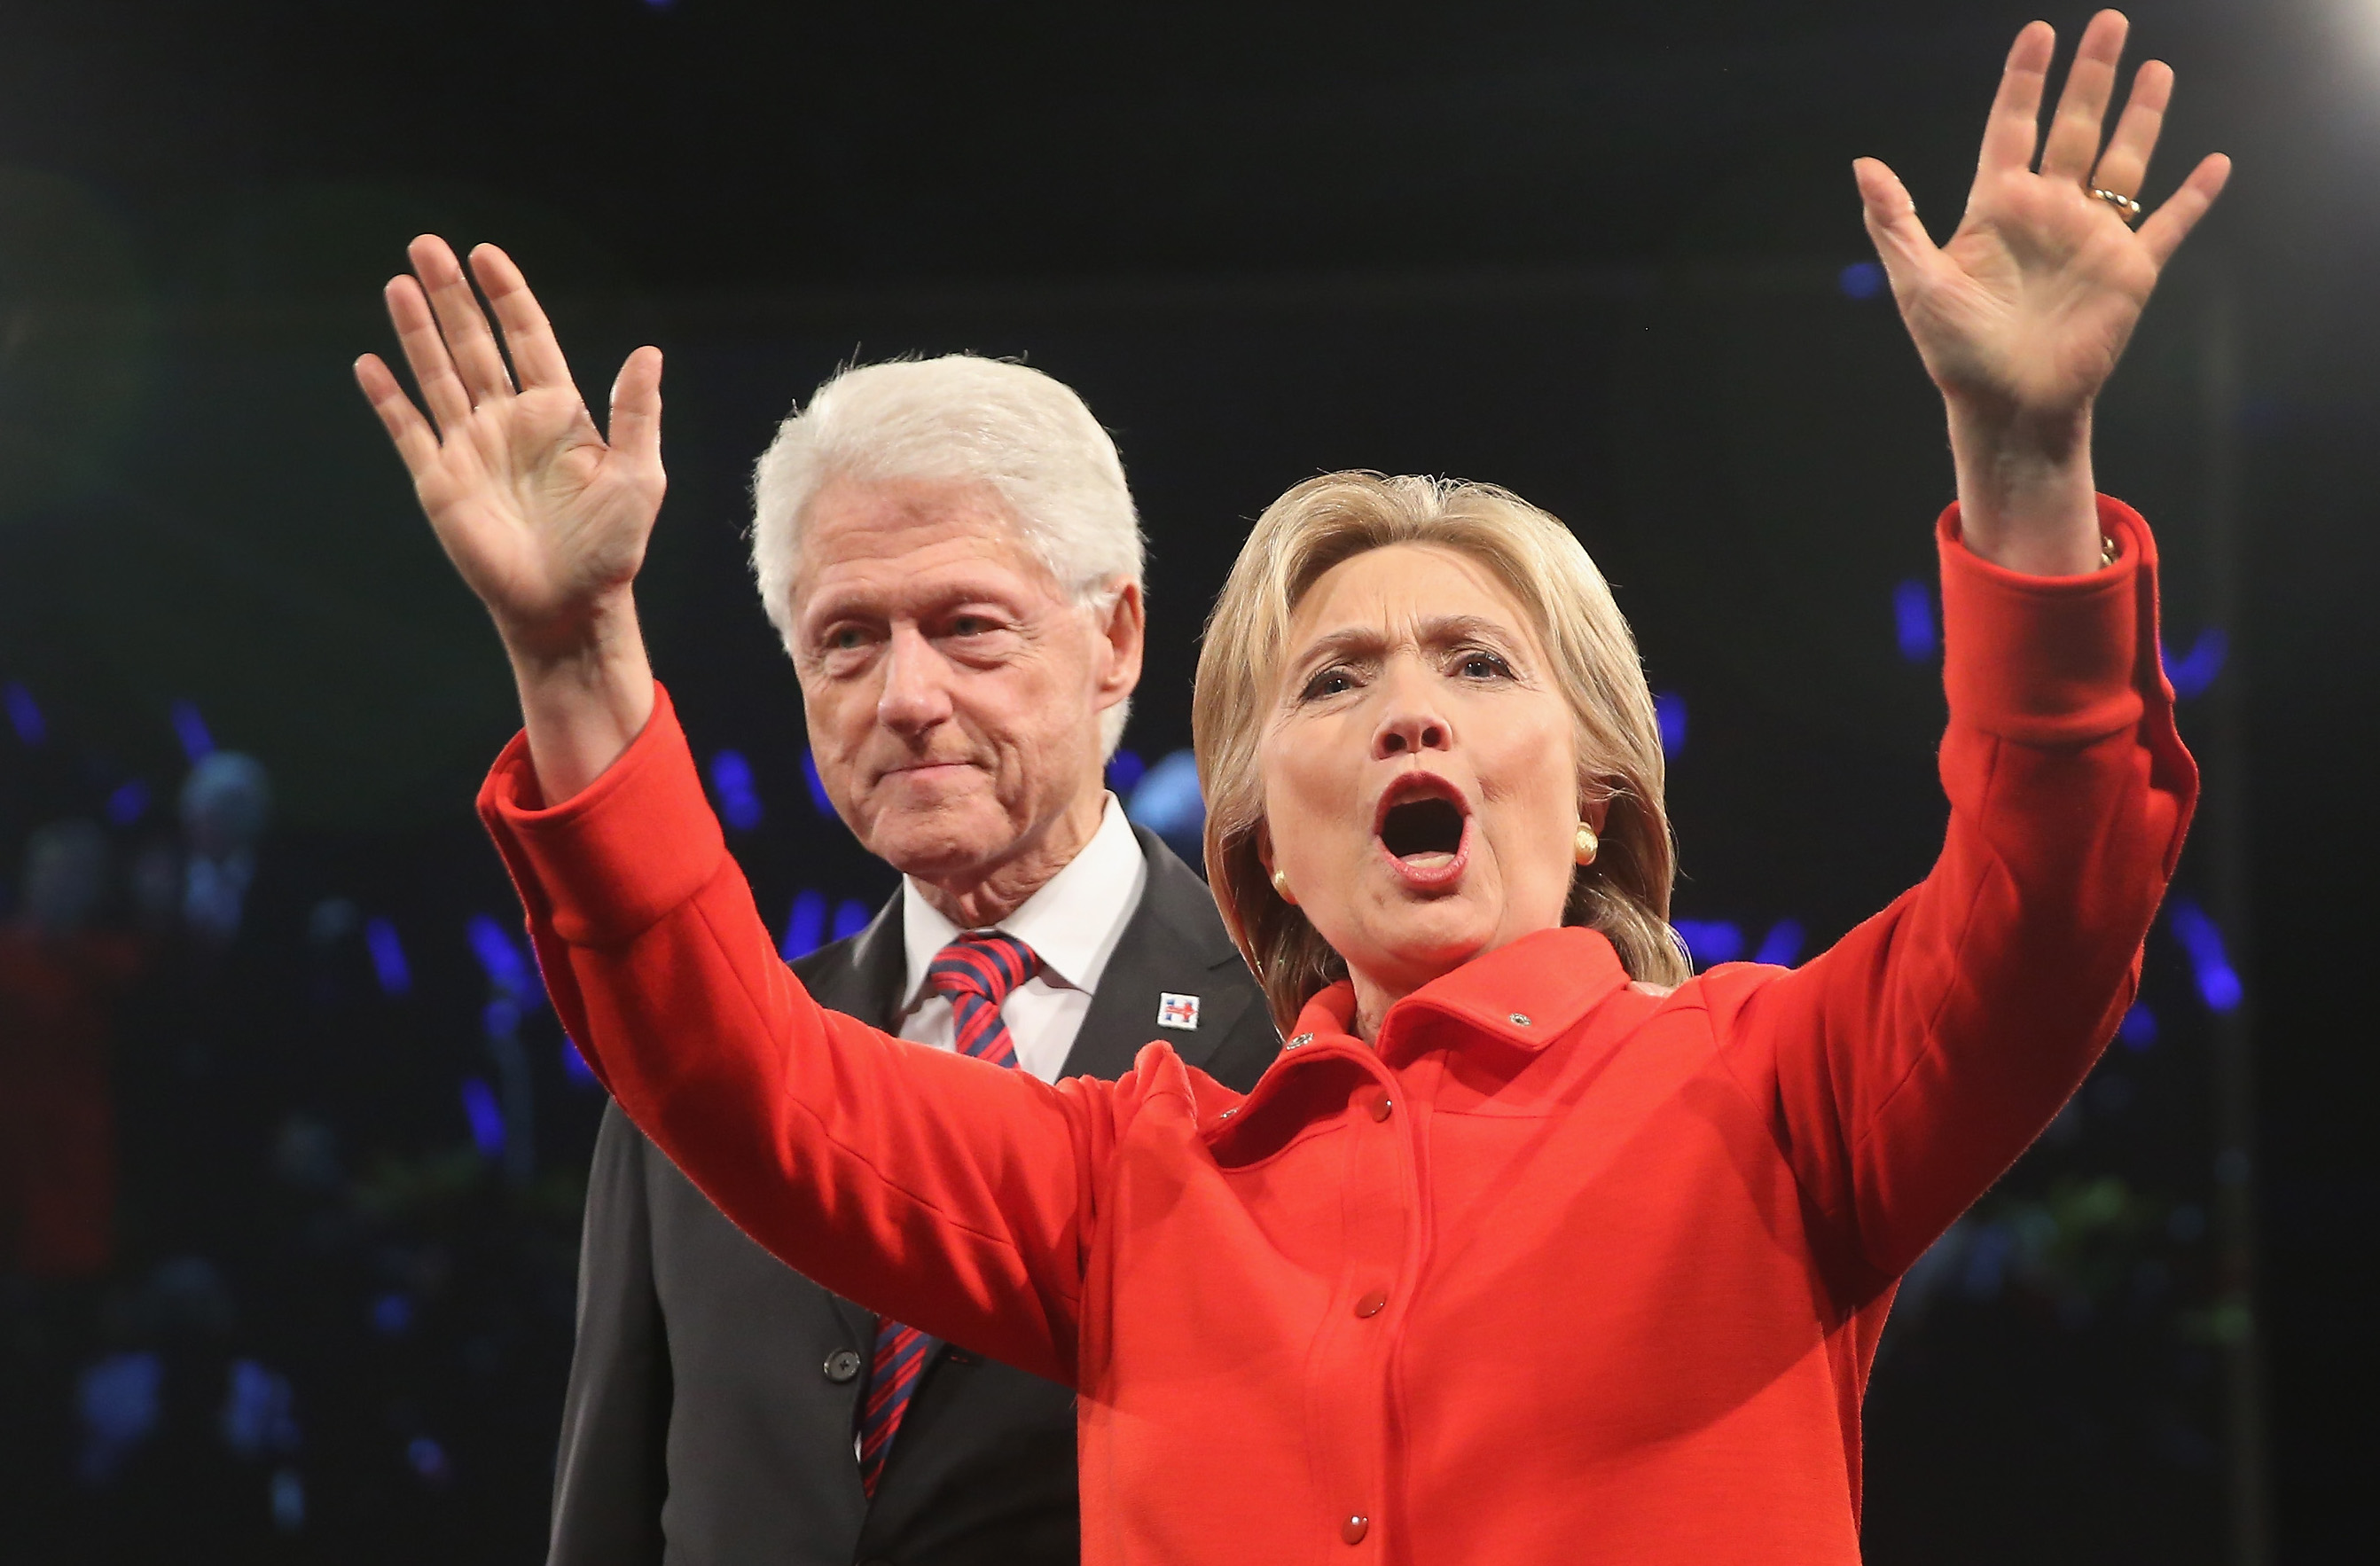 Bill Clinton rapist, Bill Clinton women, Hillary and Bill Clinton marriage, Clinton responds to heckler, Clinton rally